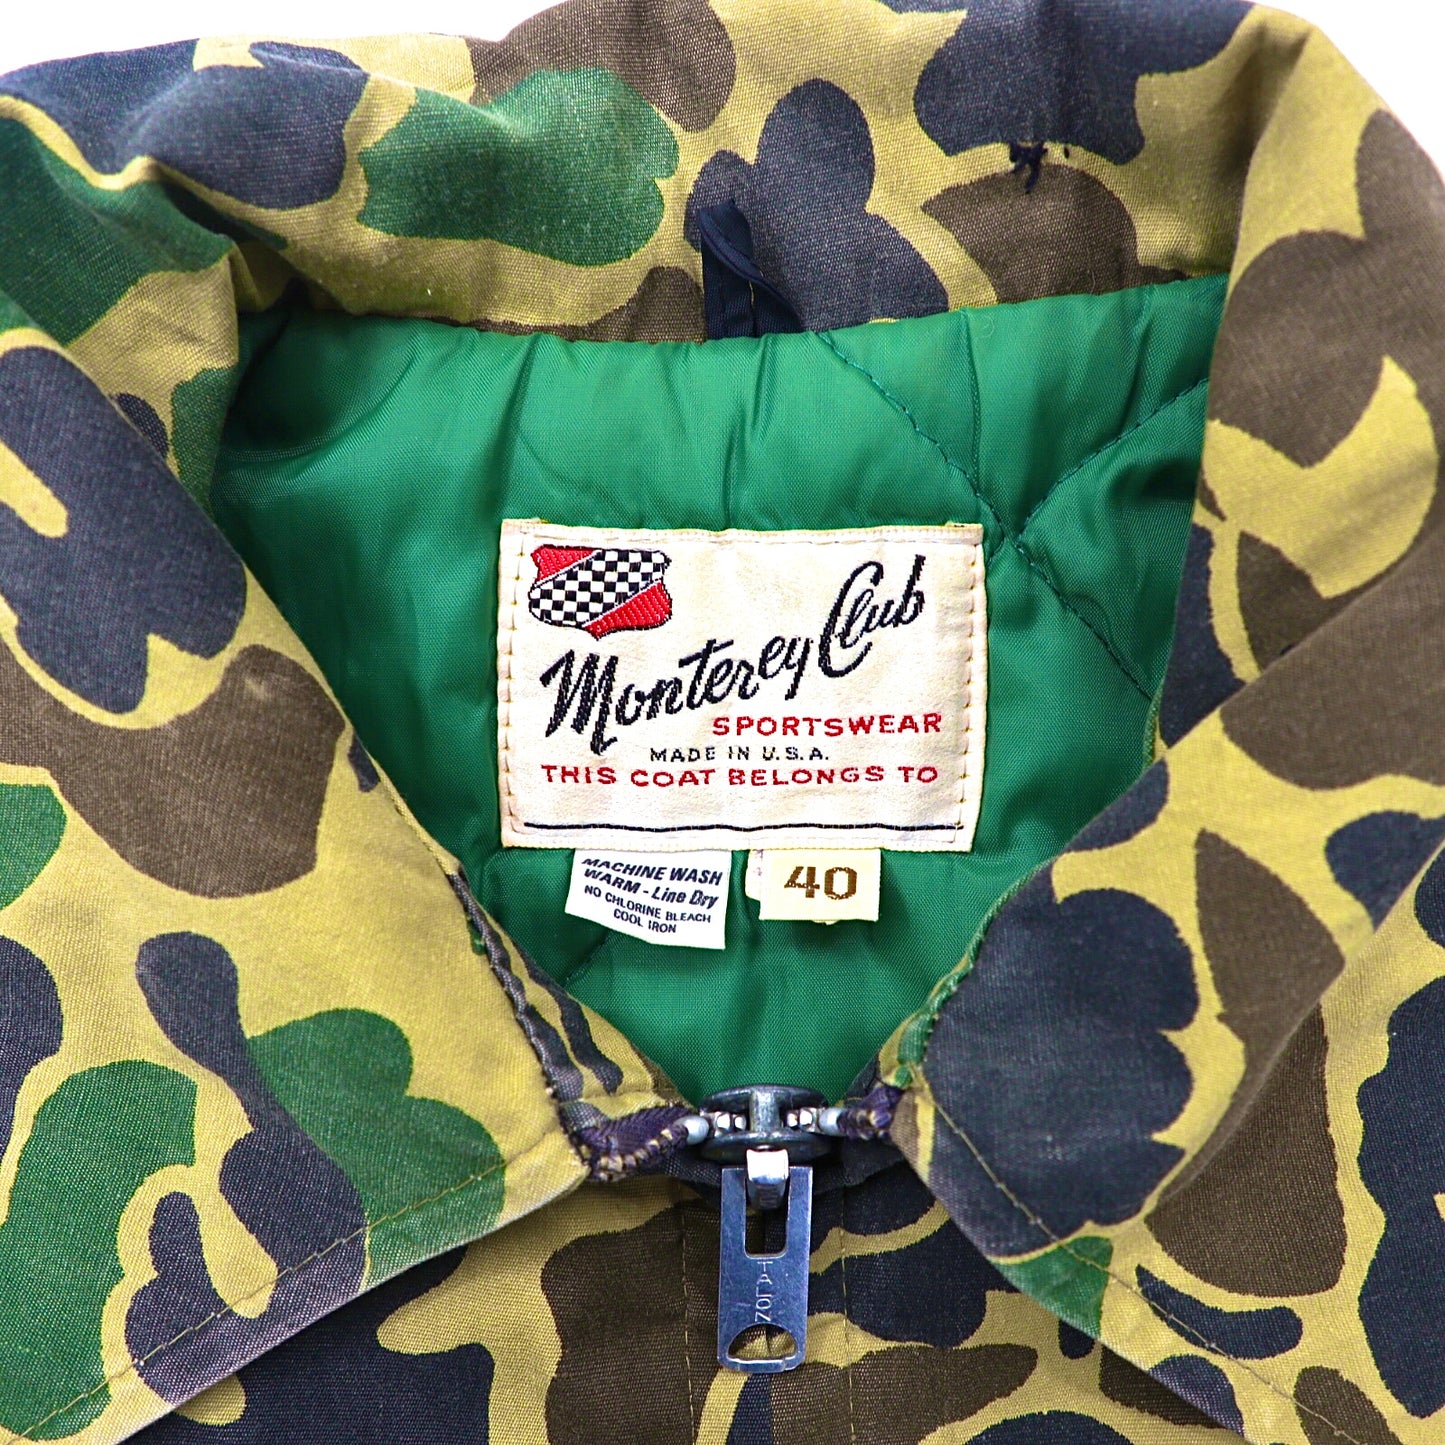 MONTEREY CLUB SPORTSWEAR Hunting Jacket 40 camouflage Duck Hunter